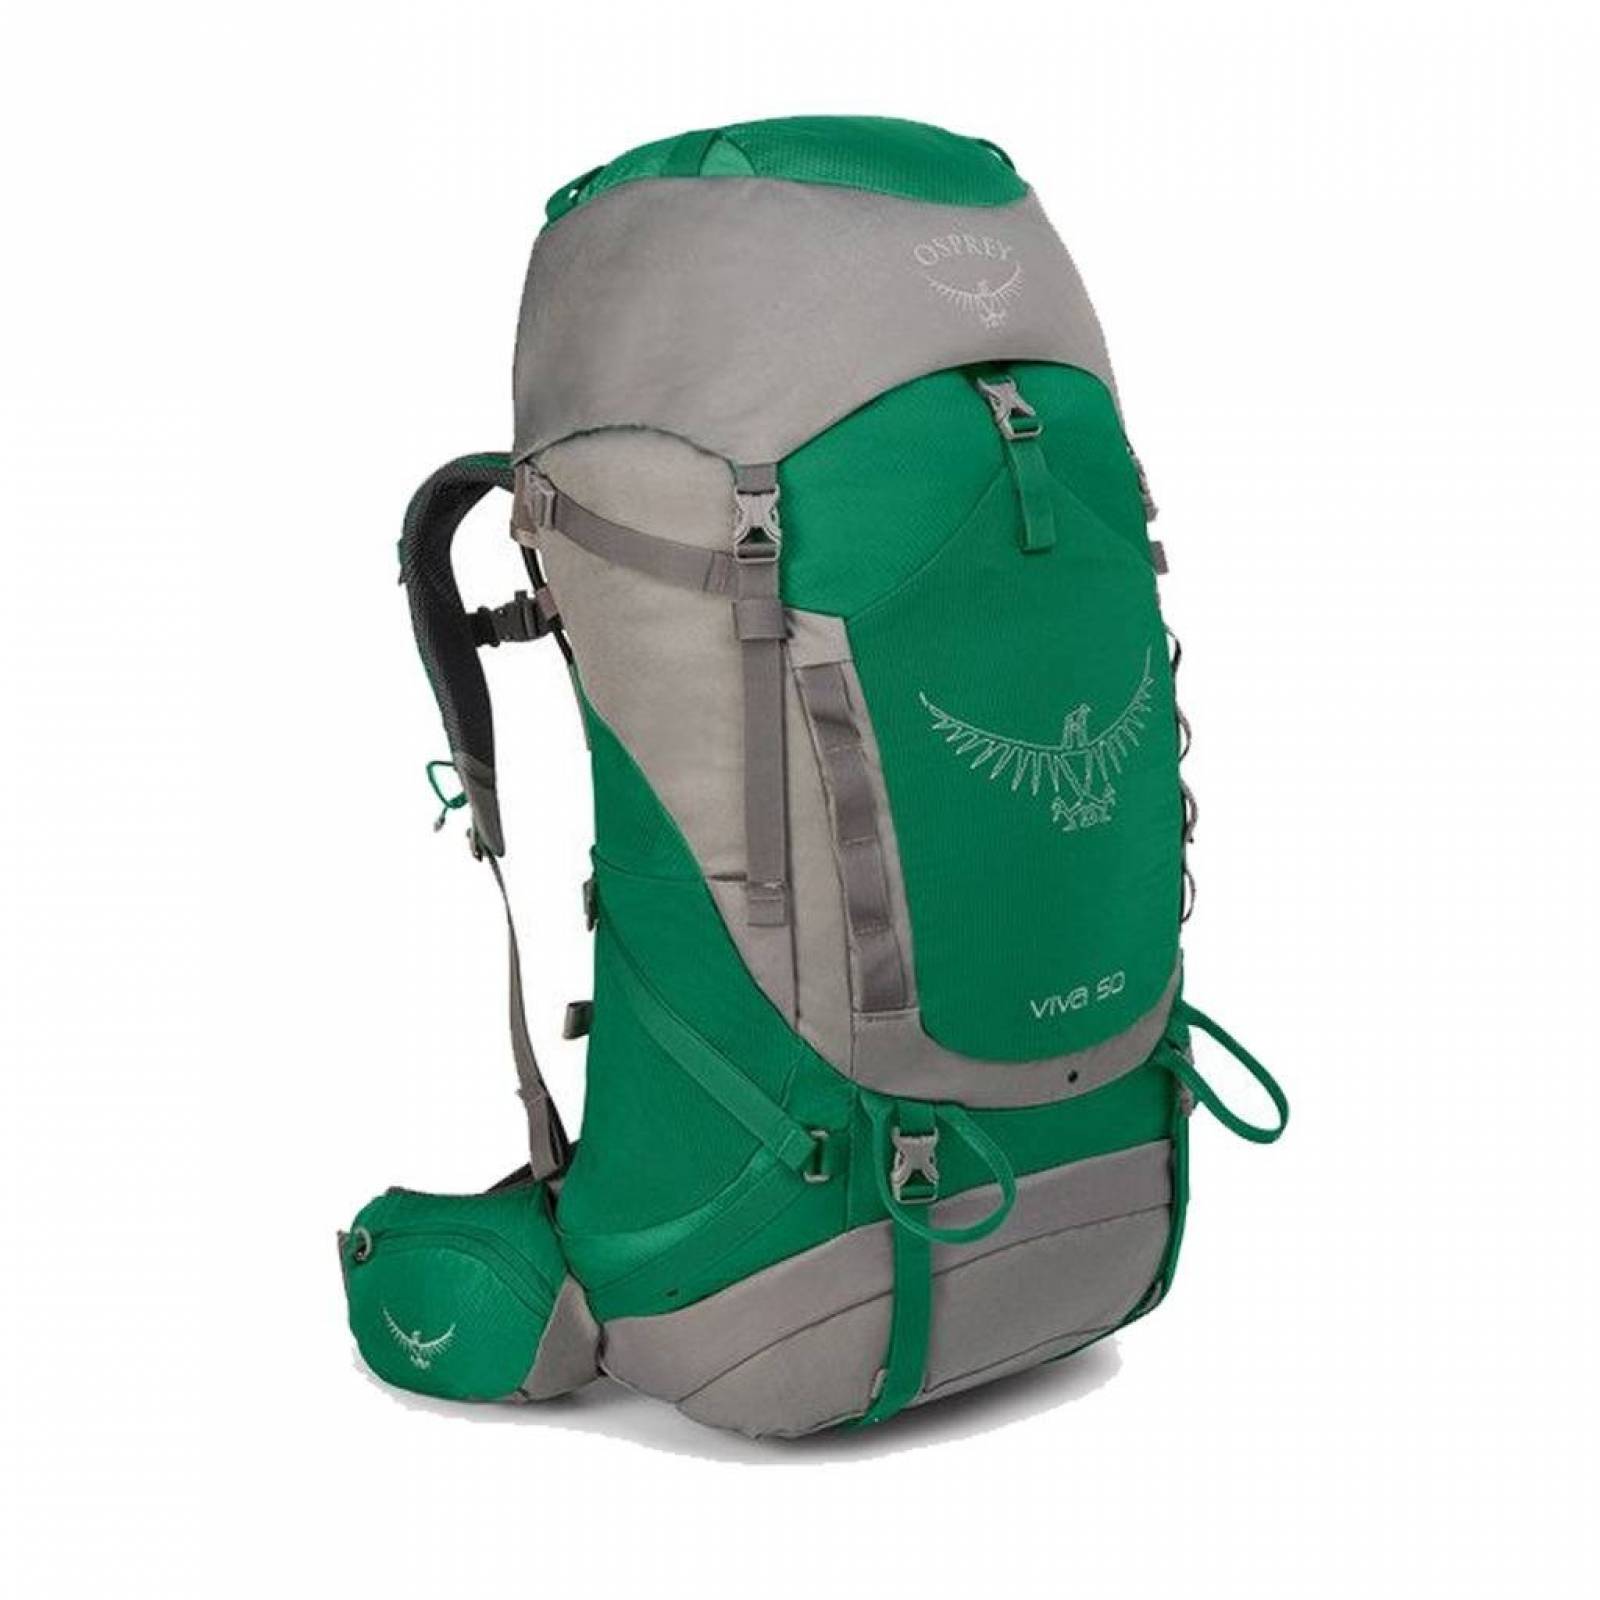 Mochila Backpack Viva 50 Talla OS Color Verde Mar Osprey